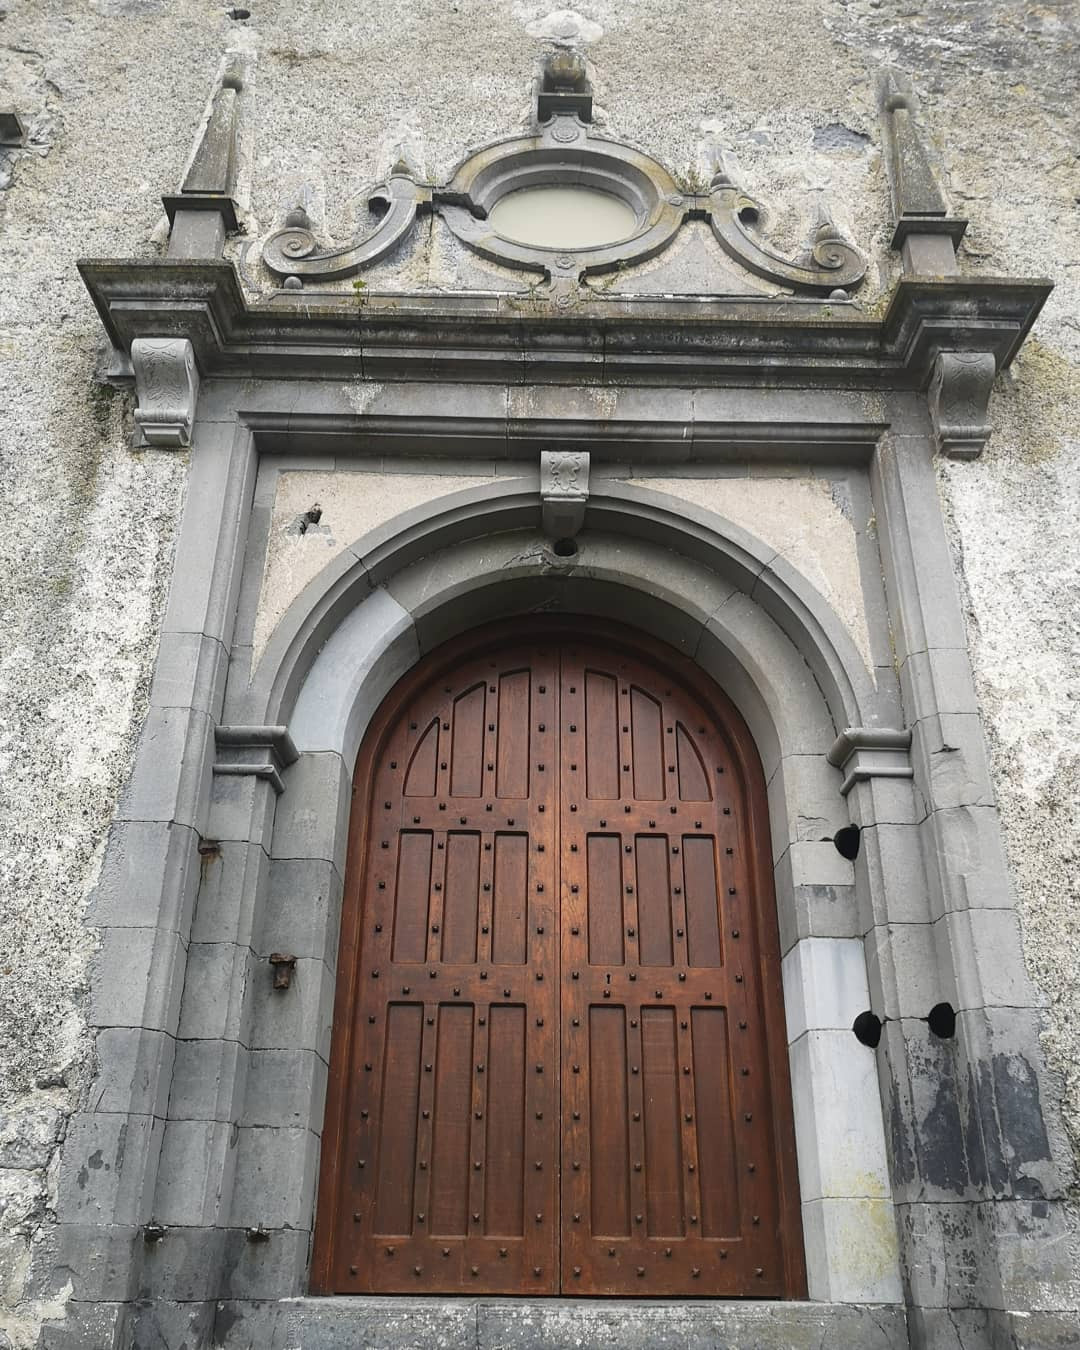 Serlian style doorway with stonework